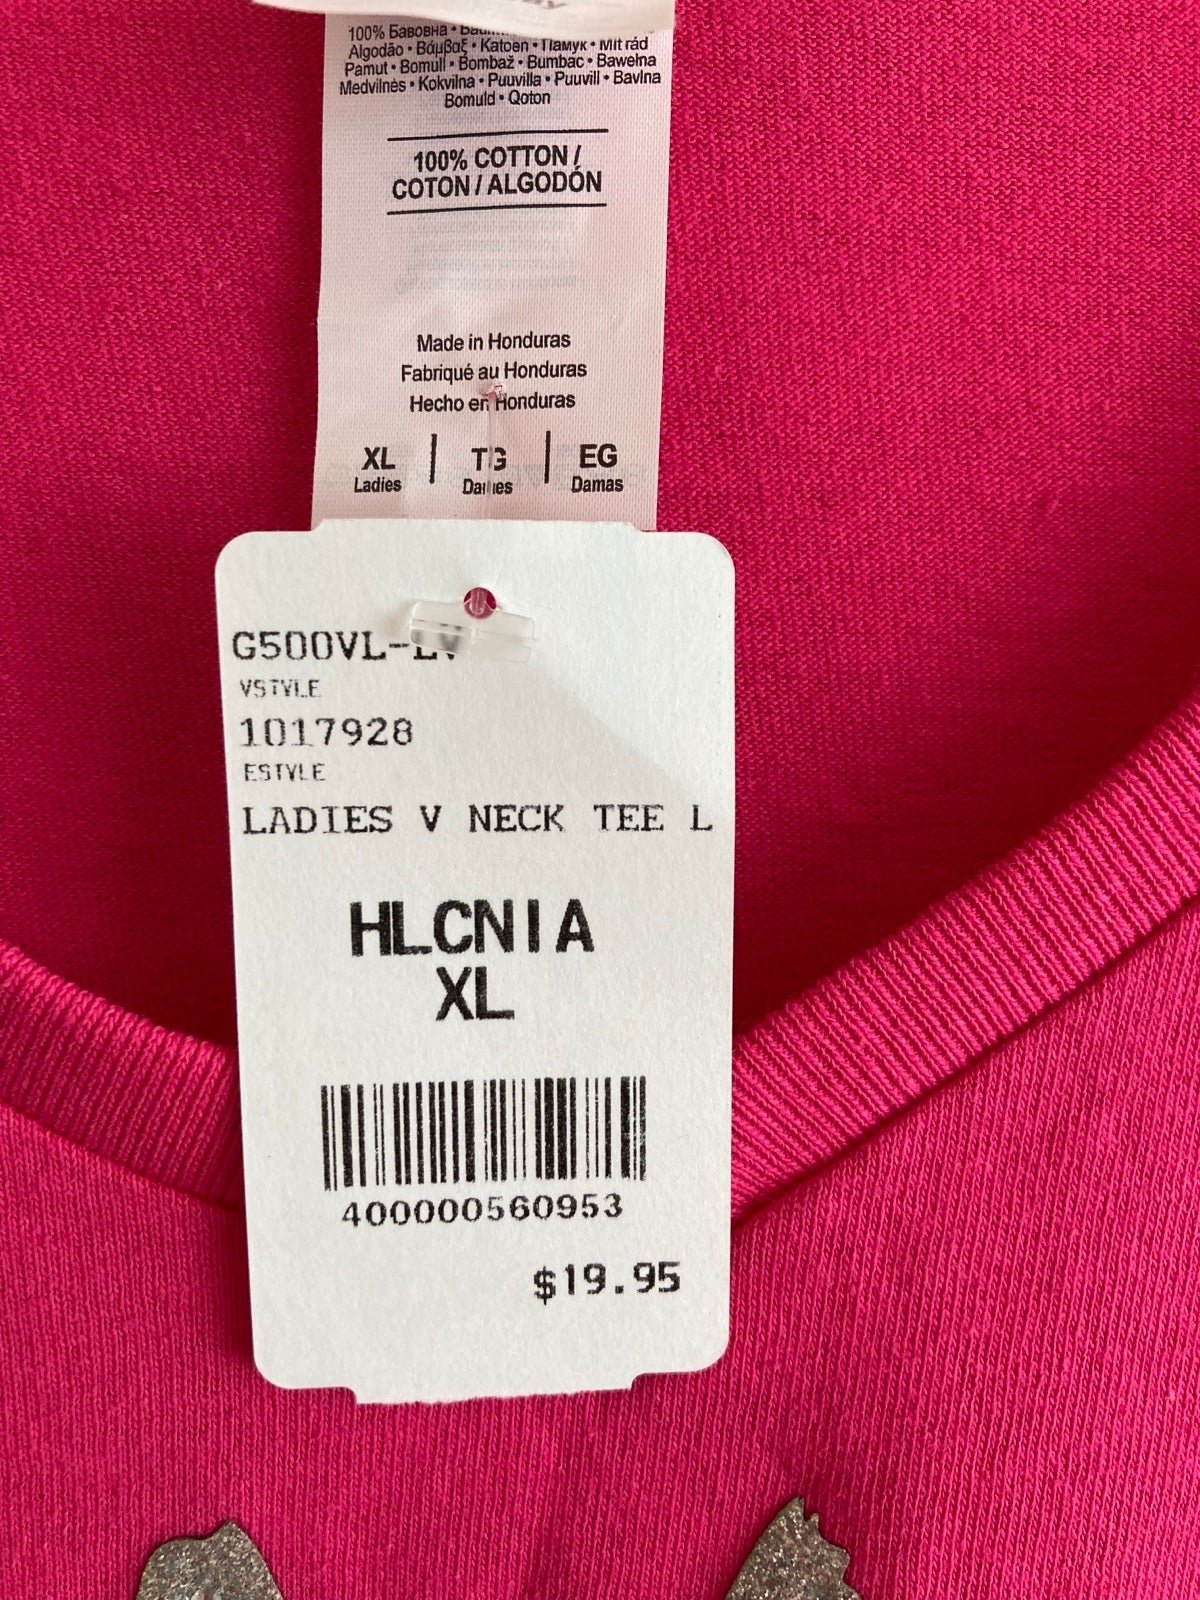 large discount 100% Cotton “Las Vegas” T-shirt Size XL for Women HDZIzd5tr Counter Genuine 